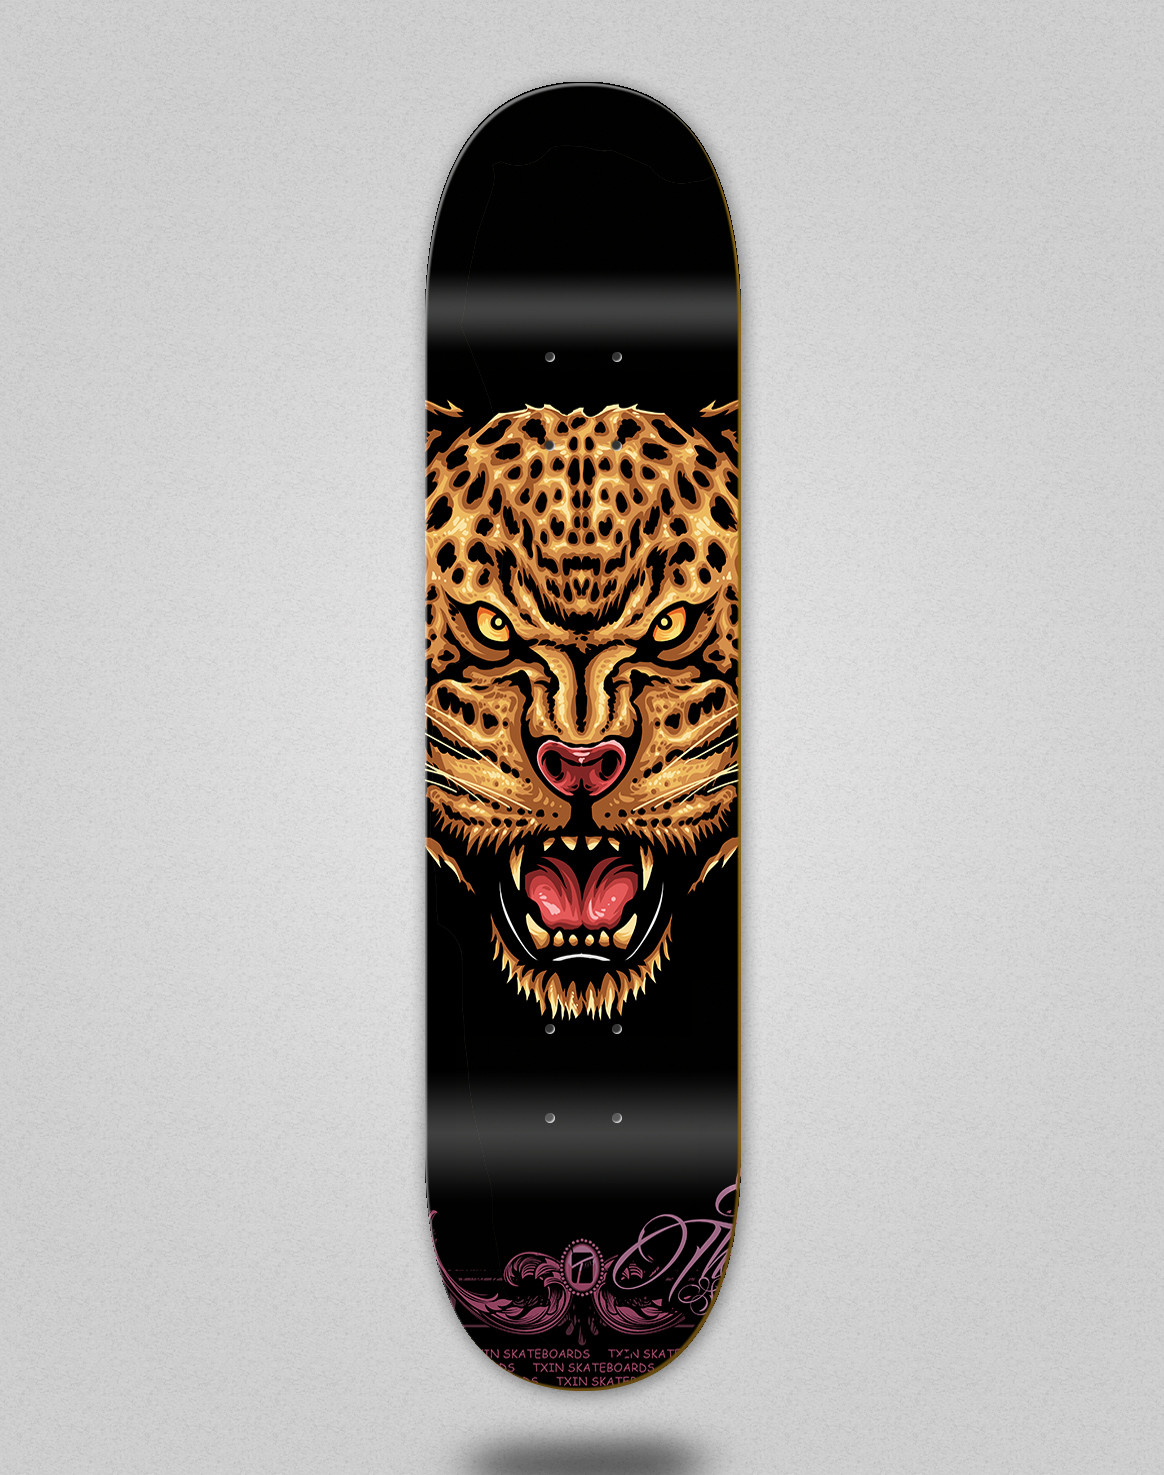 Txin skateboard deck – Jaguar